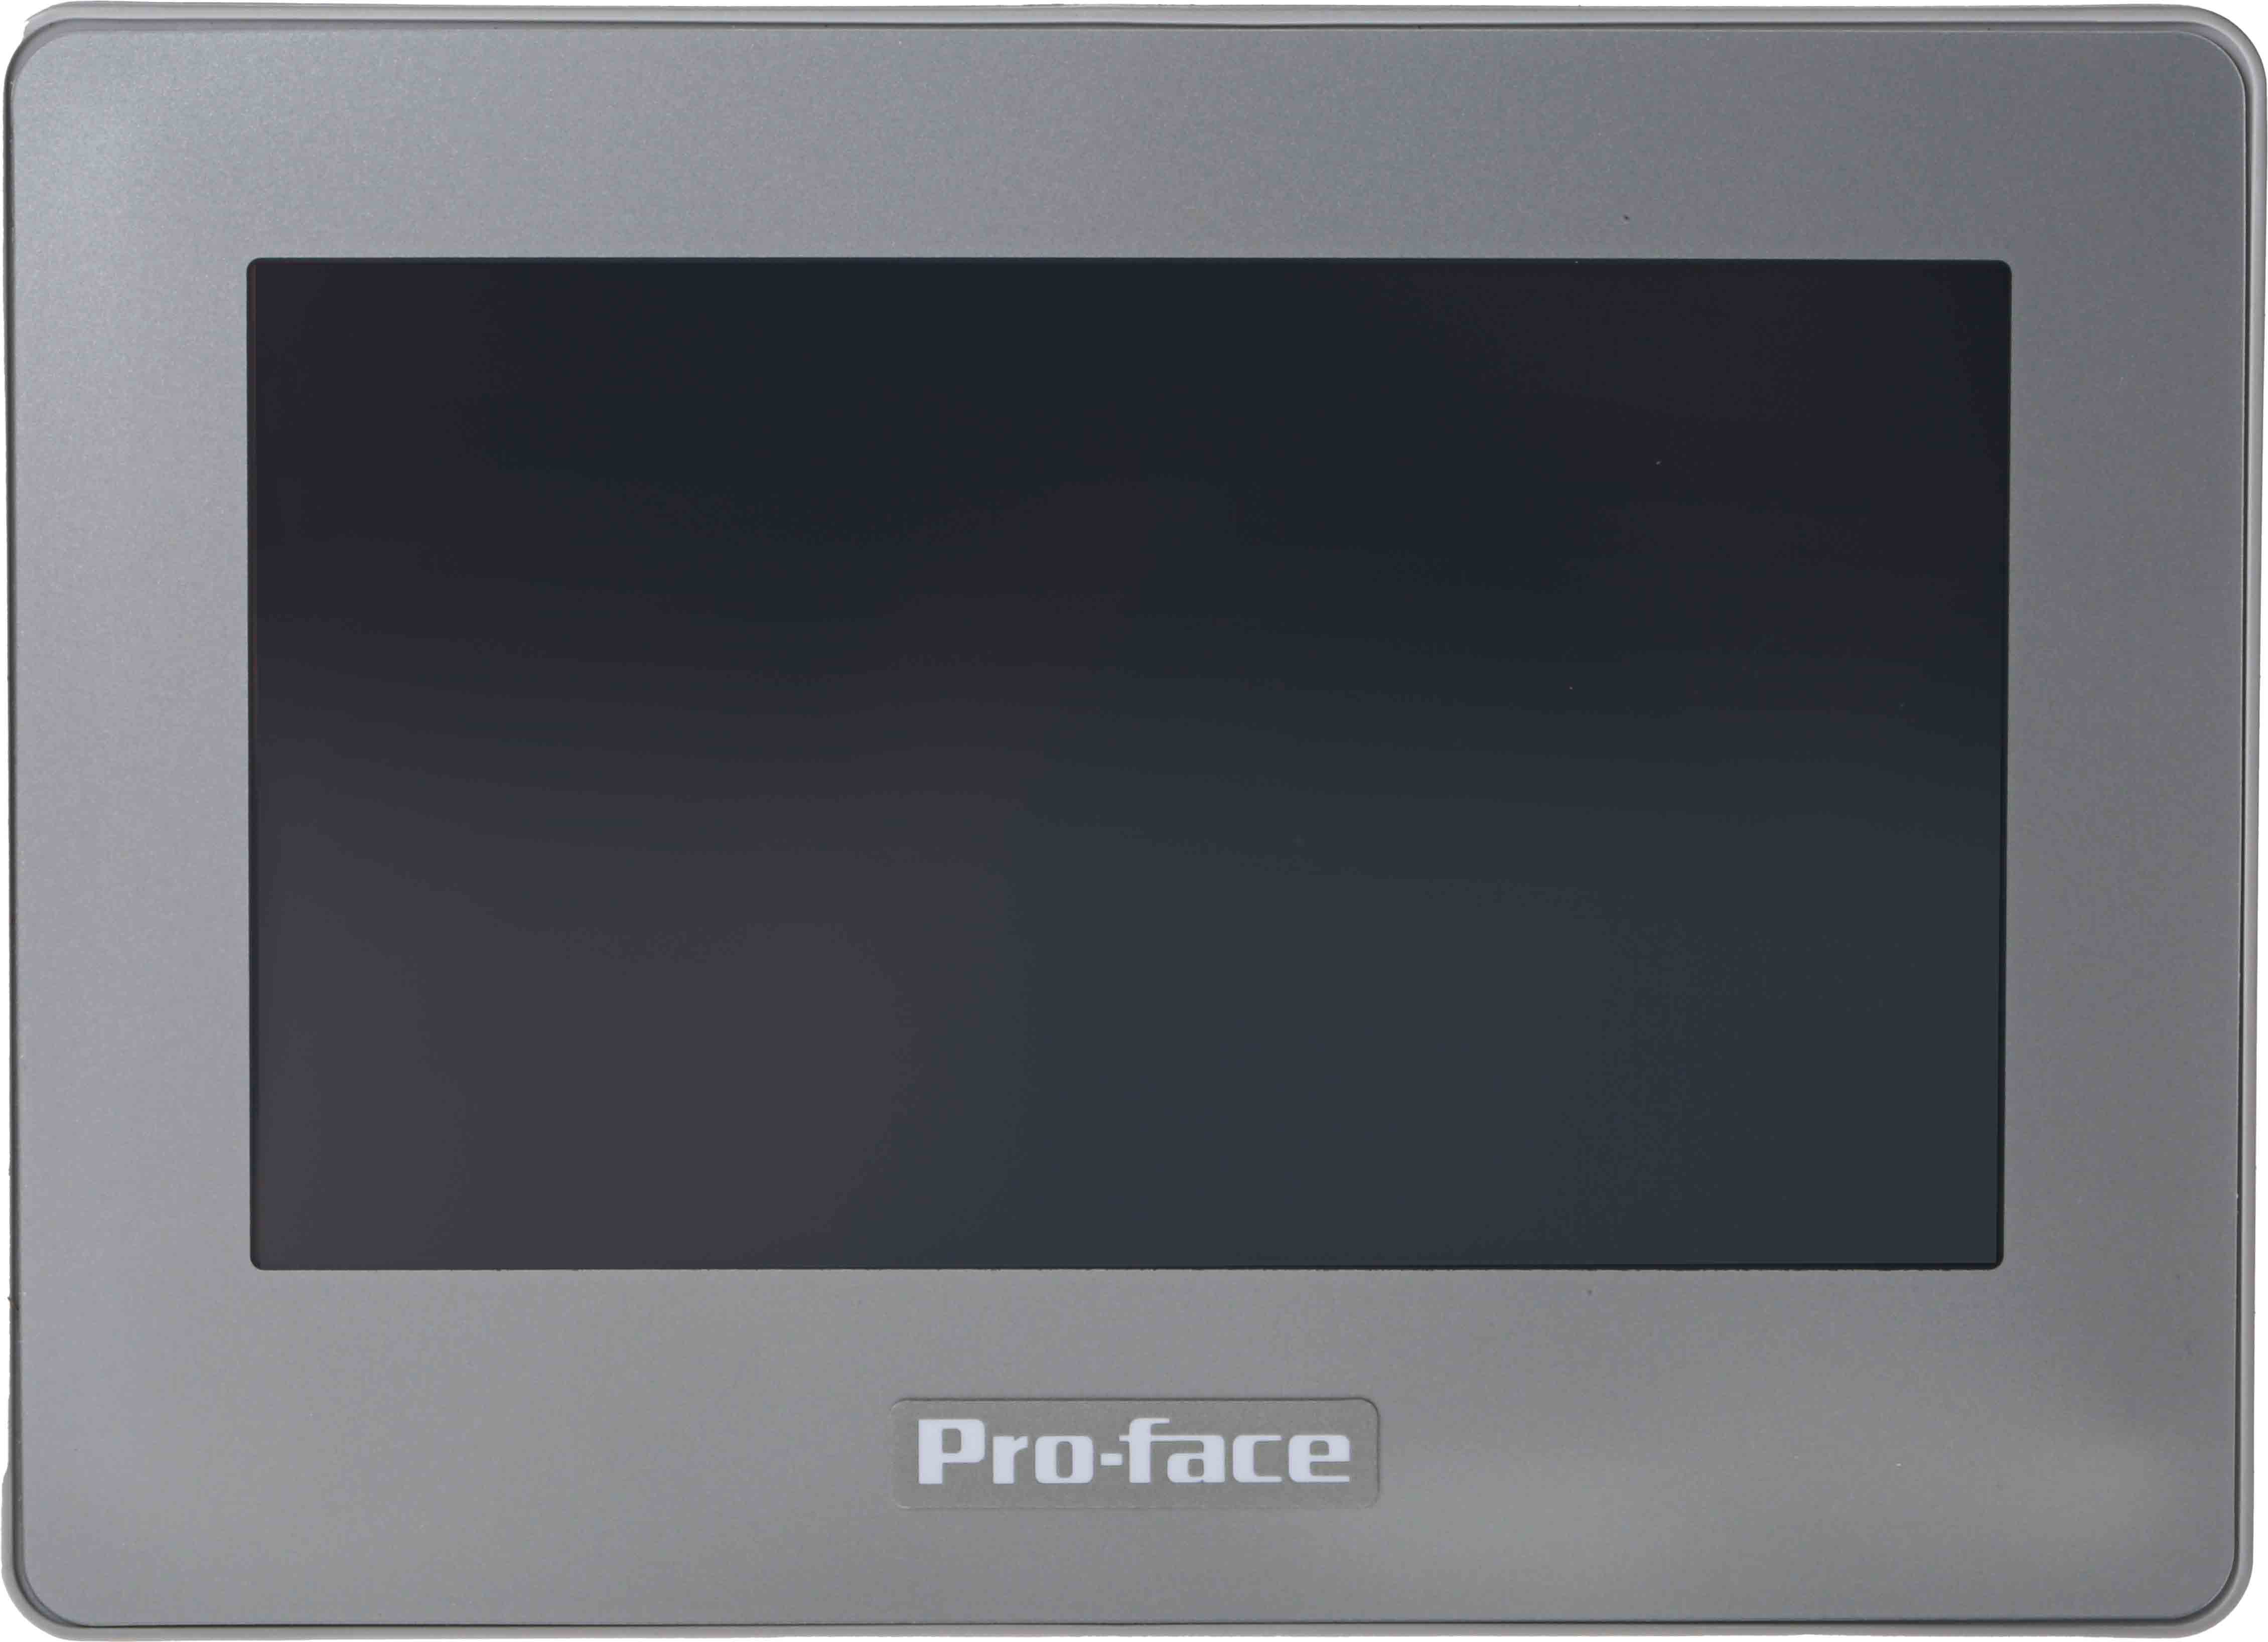 Pro-face GP4100 Farb TFT LCD HMI-Touchscreen 480 x 272pixels, 12 → 24 V dc, 124,9 x 38,8 x 90,4 mm